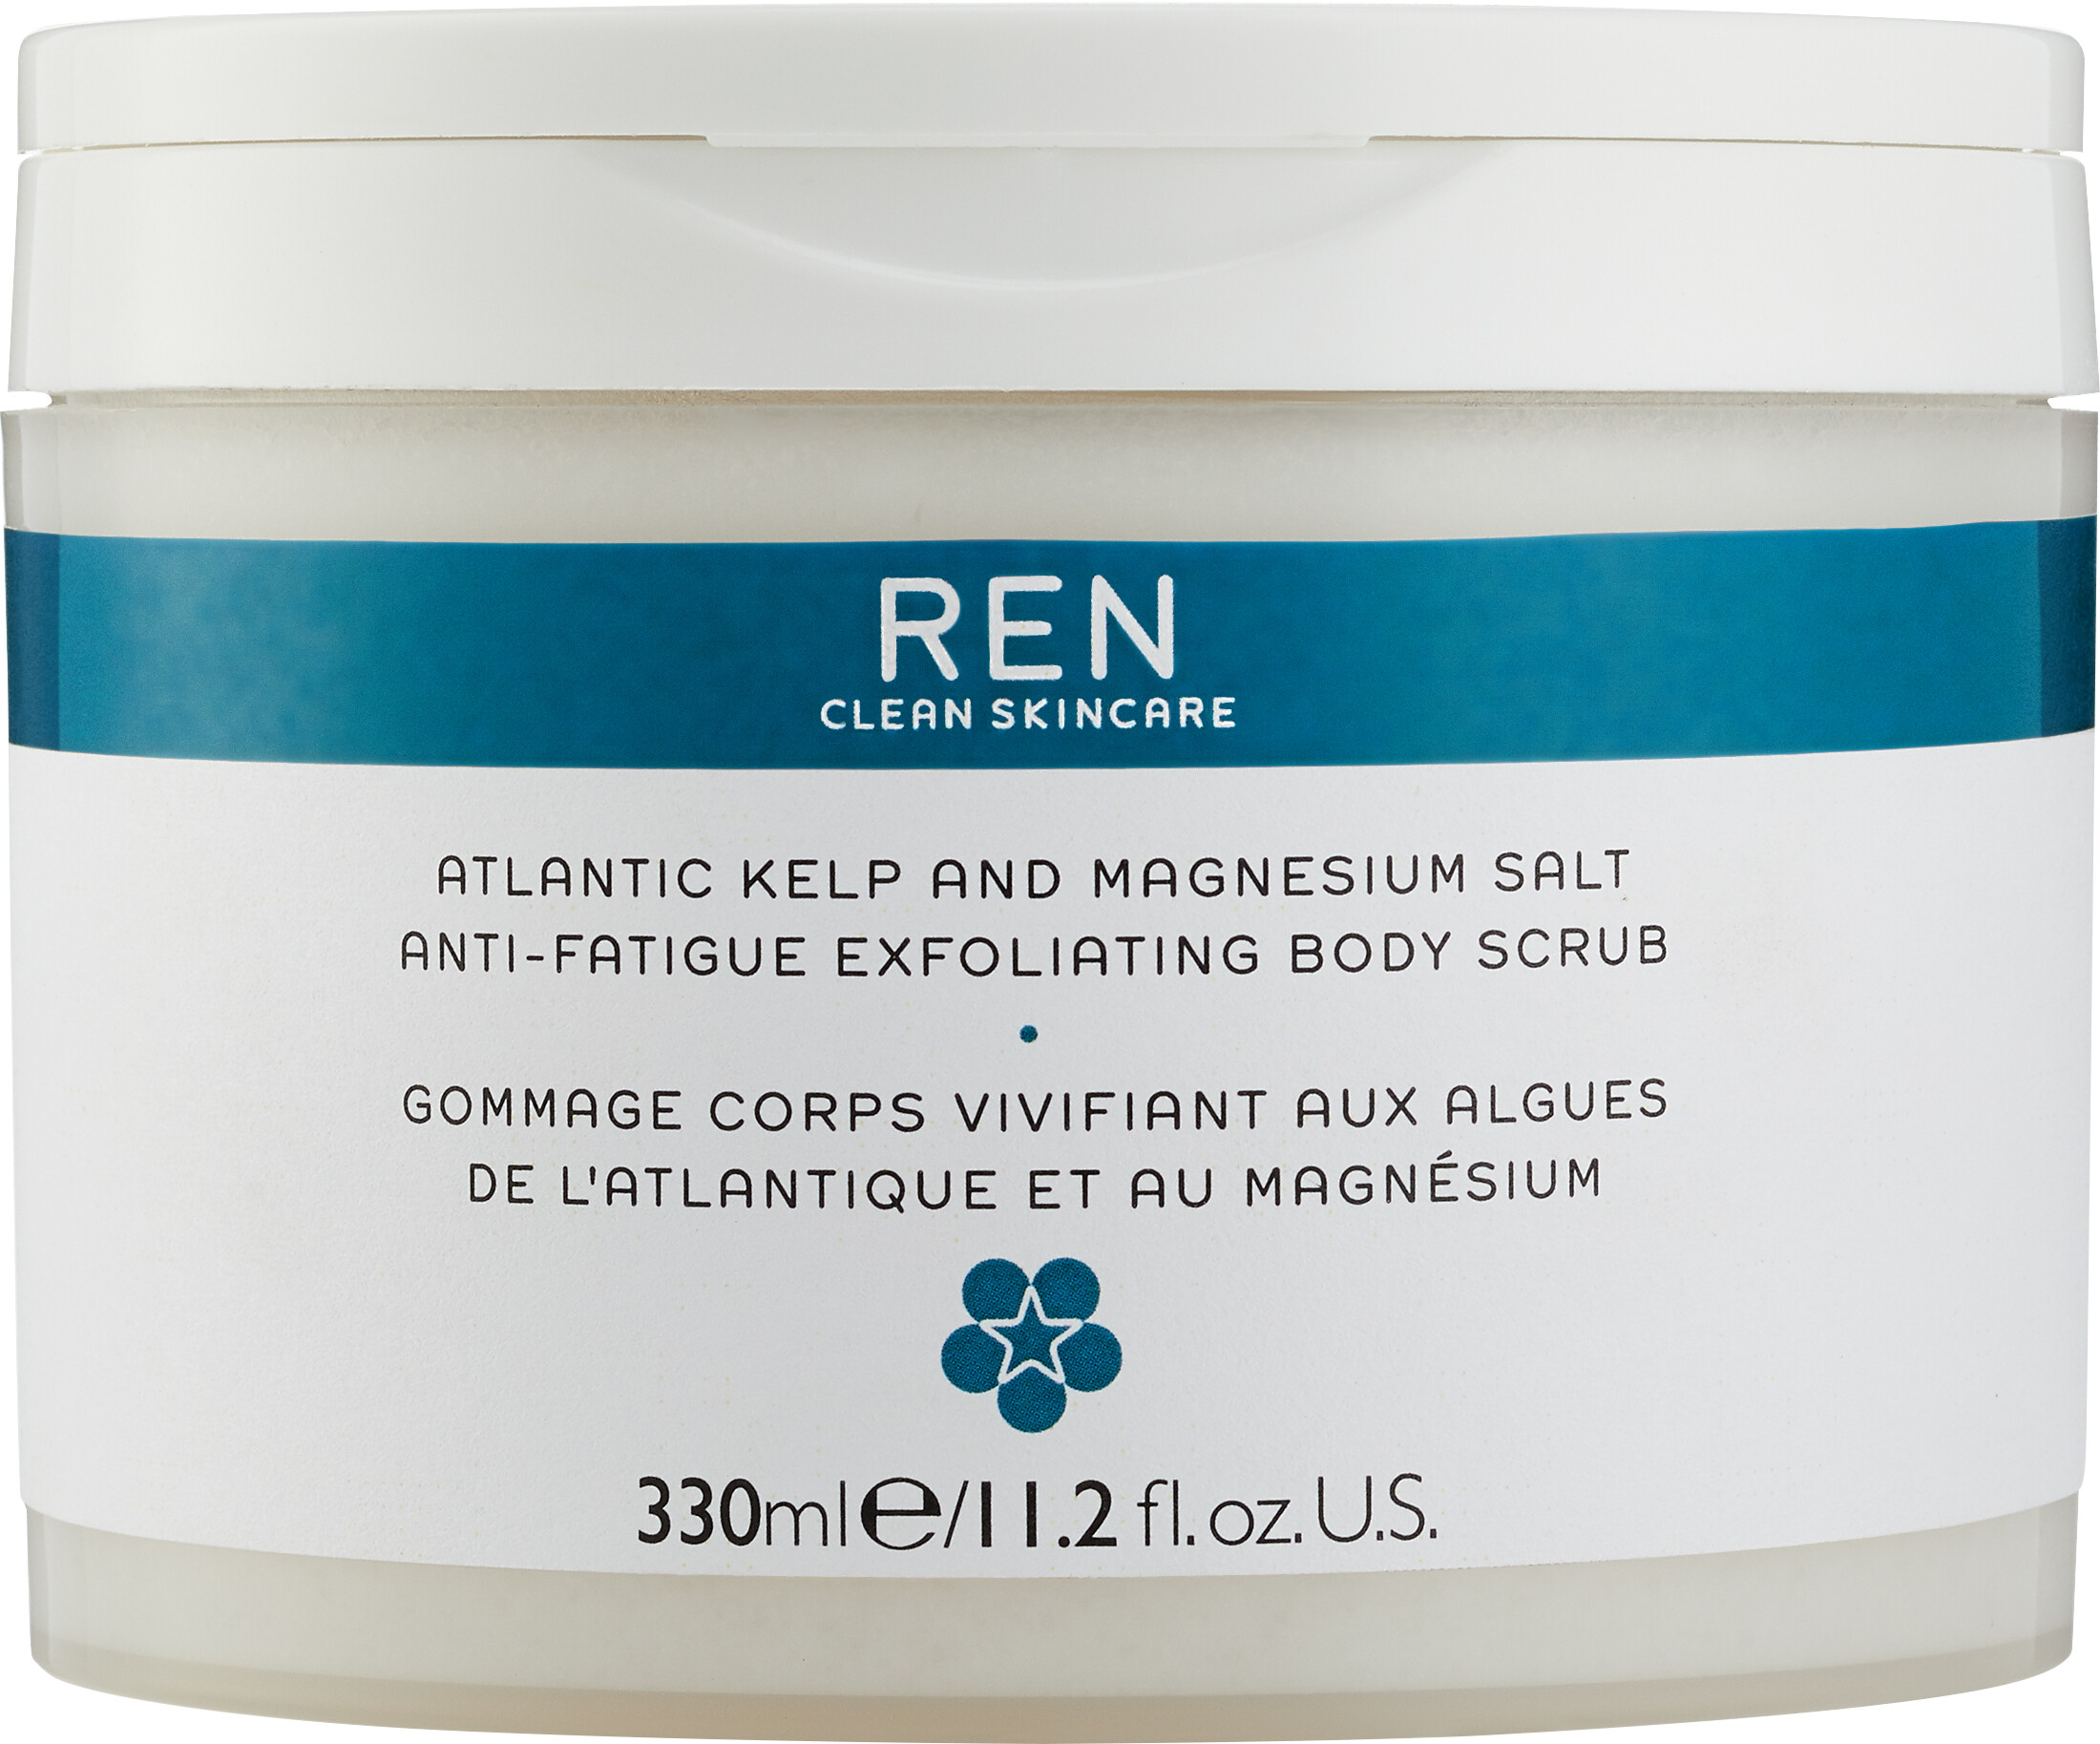 REN Atlantic Kelp And Magnesium Salt Anti-Fatigue Exfoliating Body Scrub 330ml